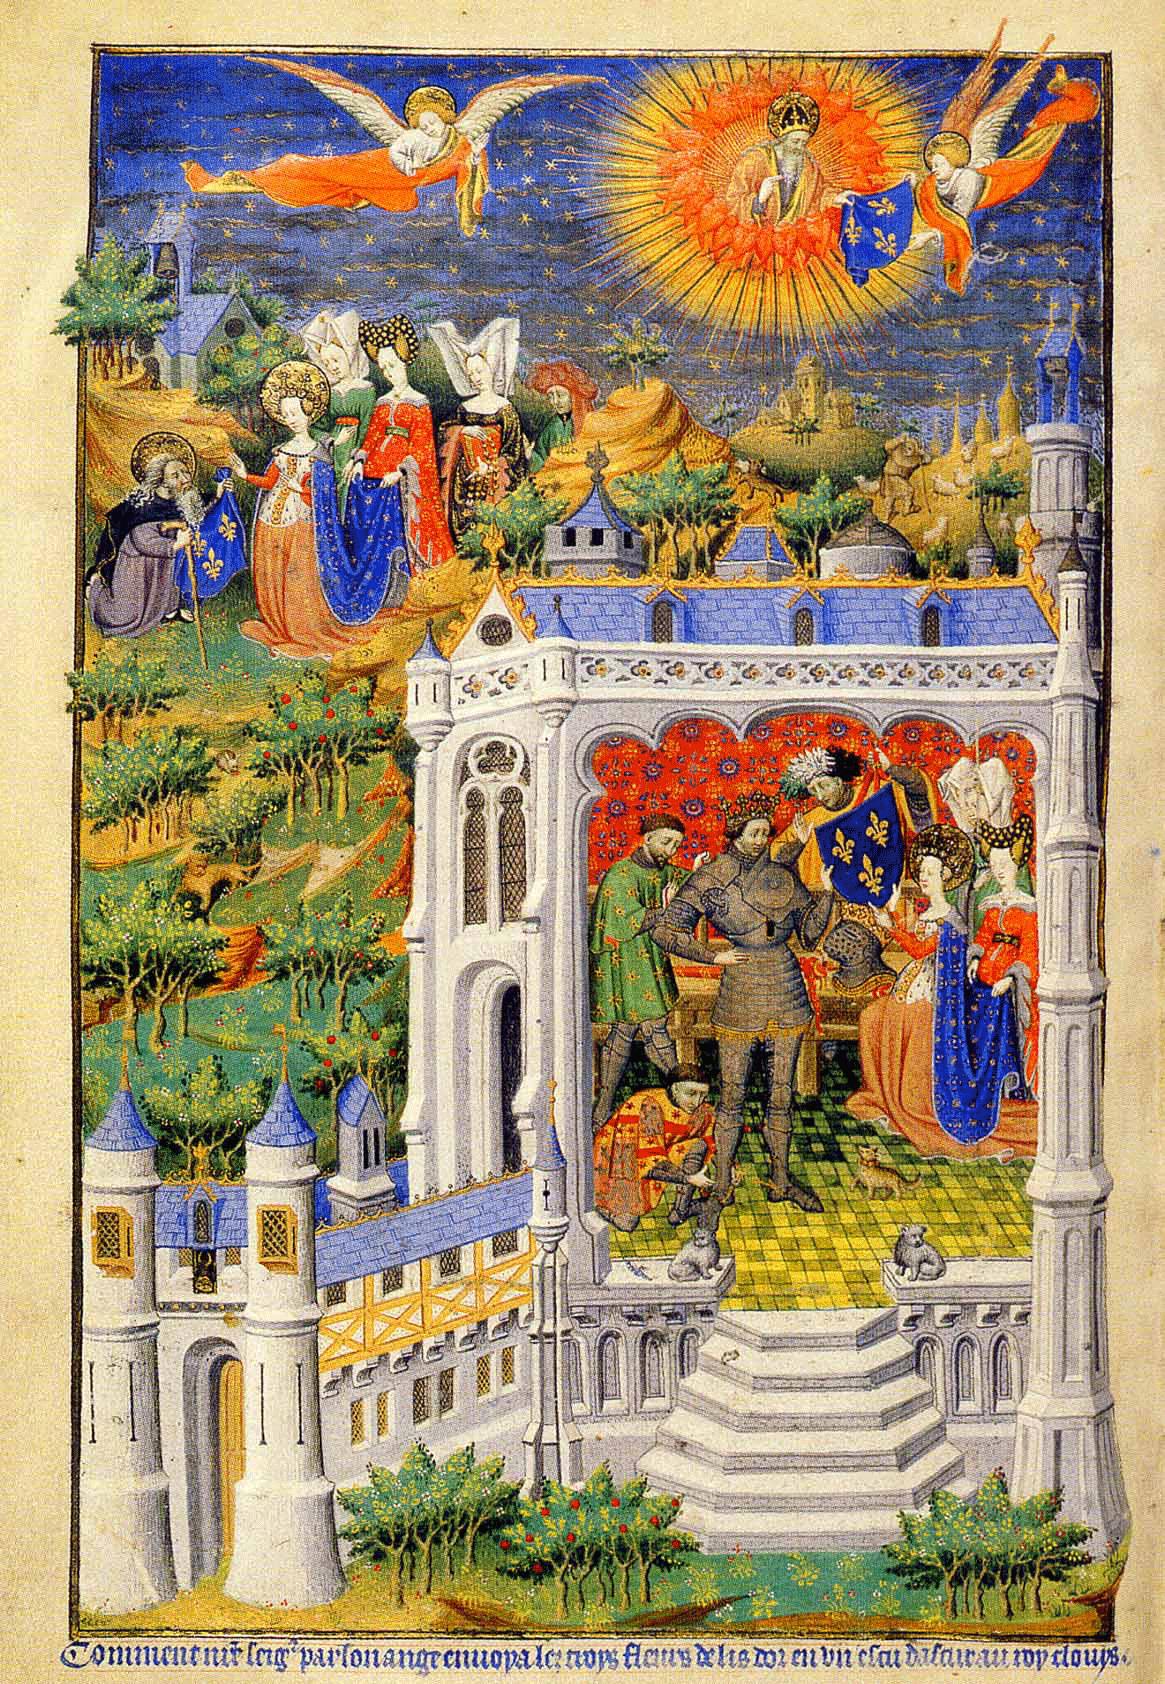 Clovis receiving the fleur-de-lis, Illuminations from the Bedford Hours, 15th century